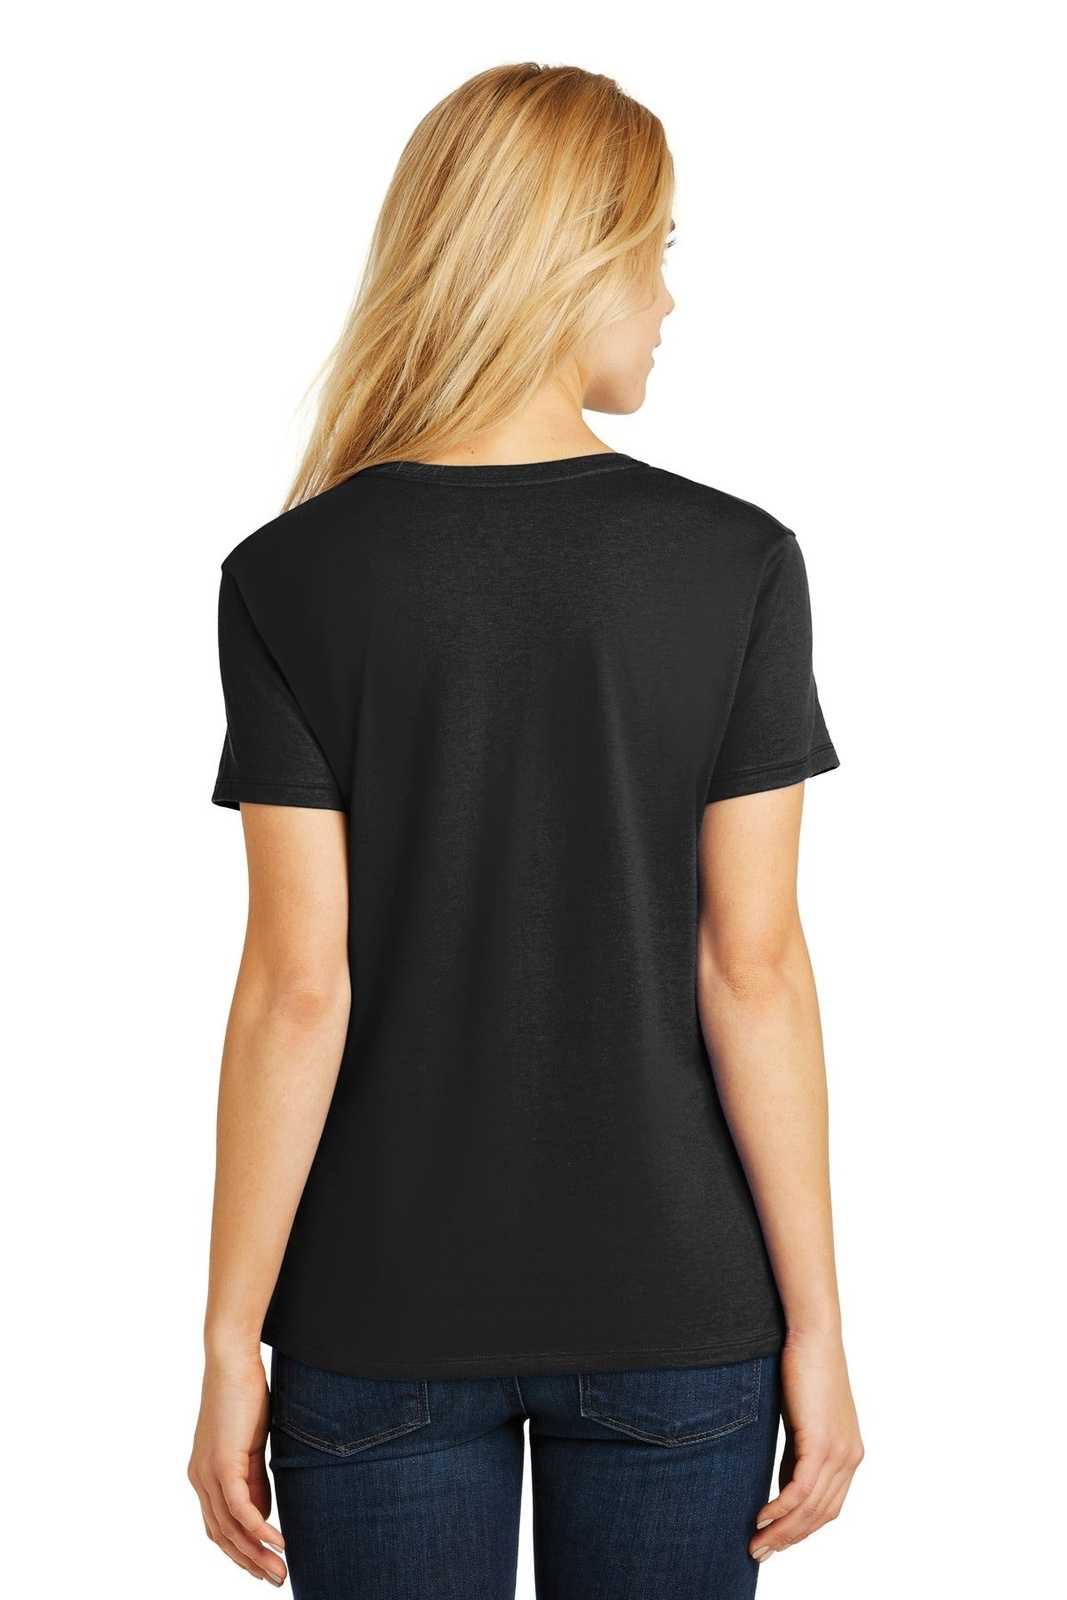 Hanes SL04 Ladies Nano-T Cotton T-Shirt - Black - HIT a Double